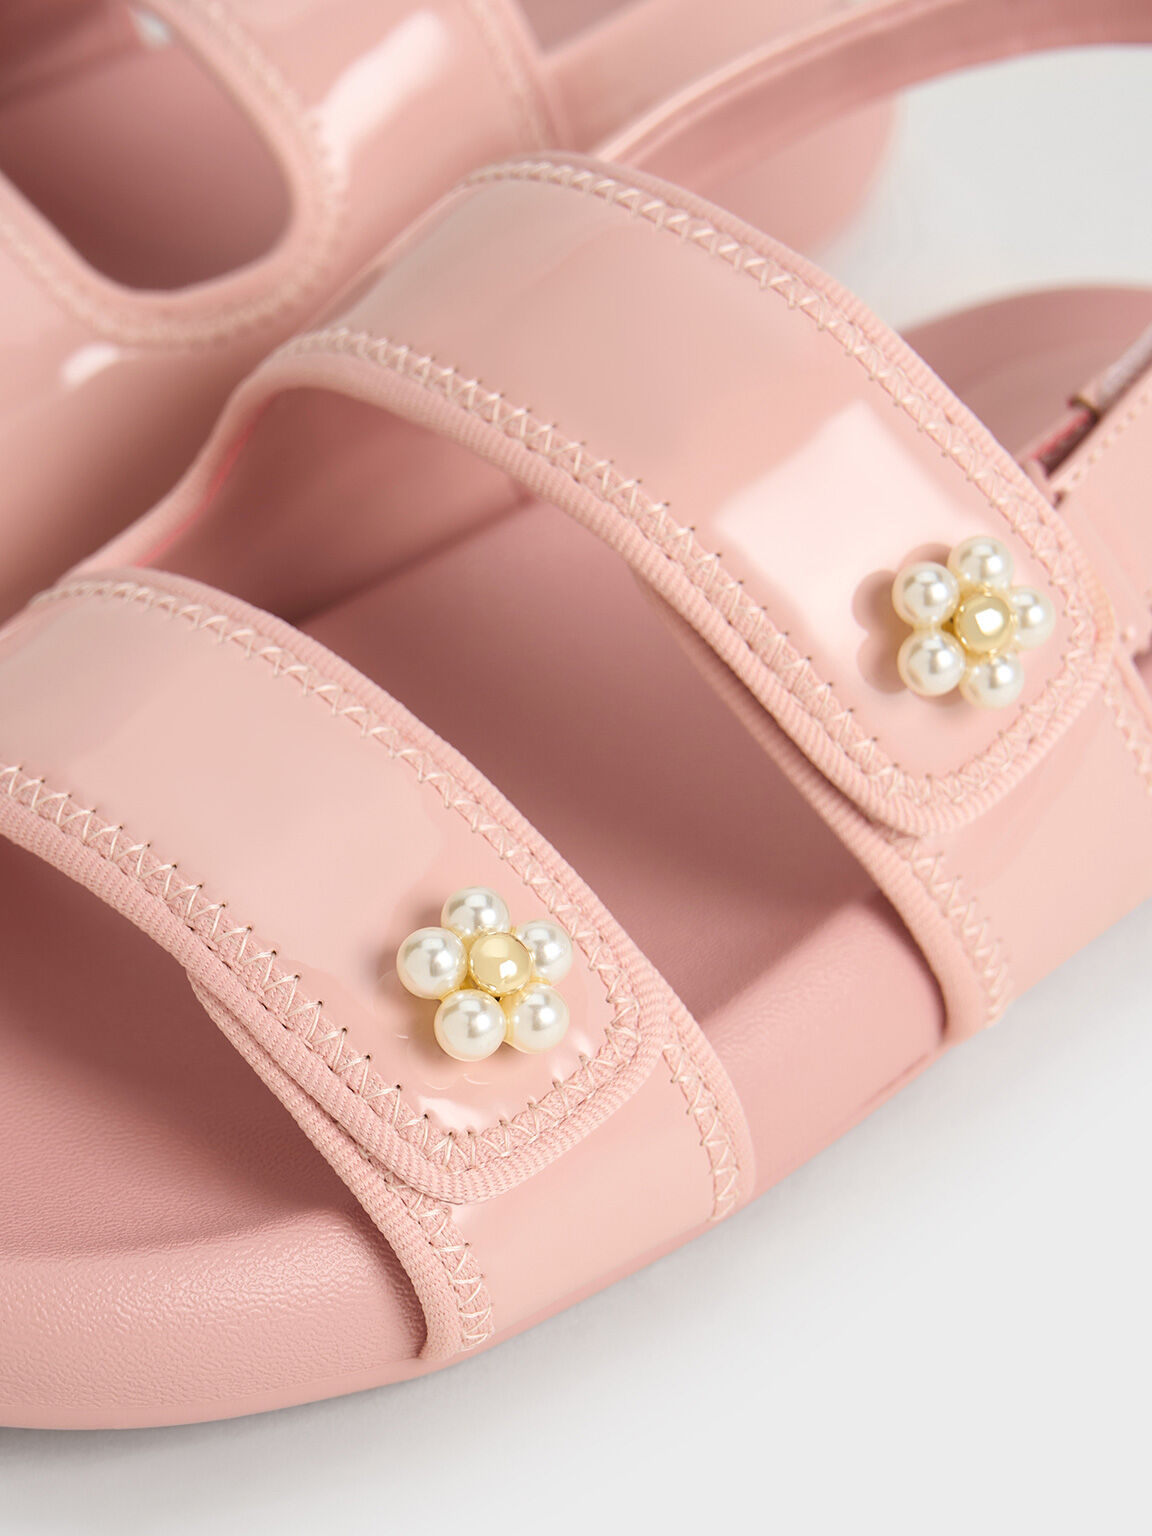 Girls' Plaid Beaded-Flower Sandals, Pink, hi-res